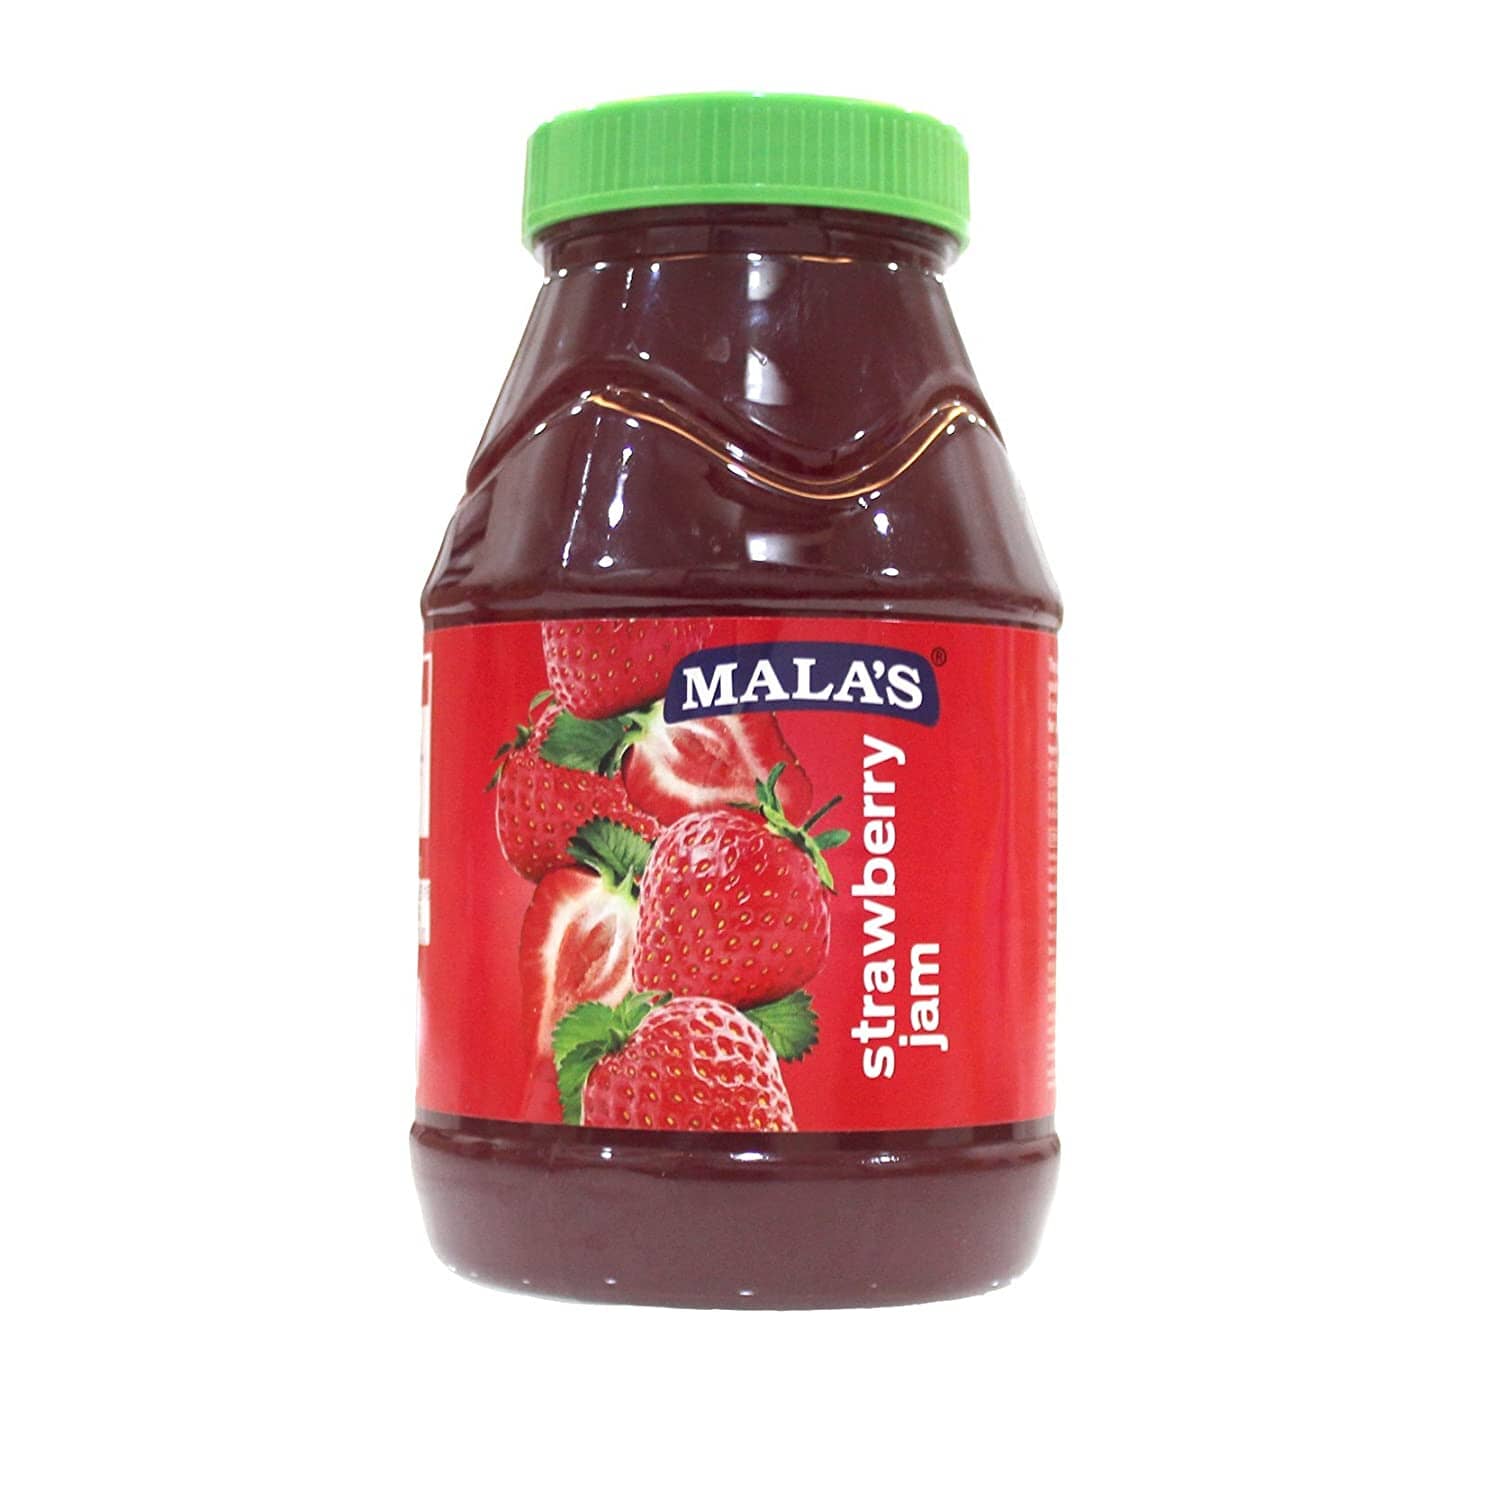 Malas Strawberry Jam 1Kg Pet Jar JAM Mala's